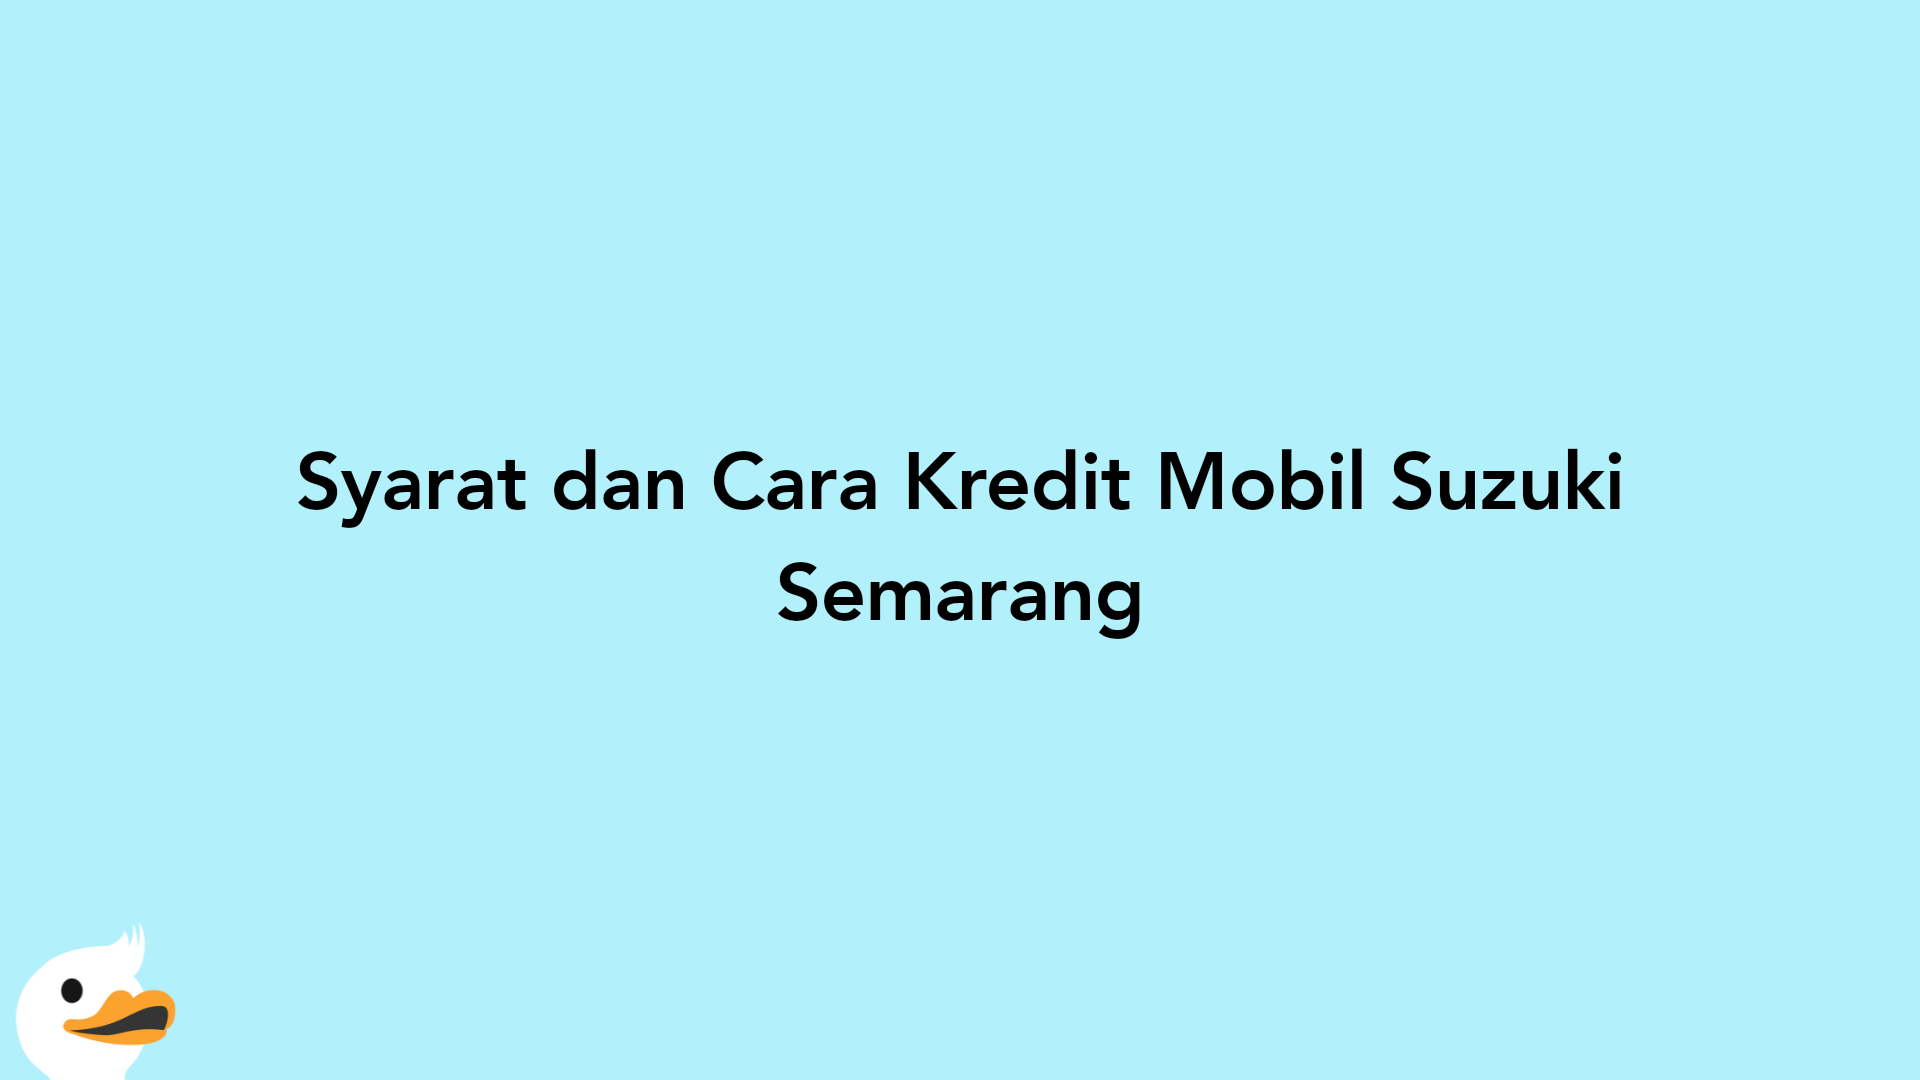 Syarat dan Cara Kredit Mobil Suzuki Semarang